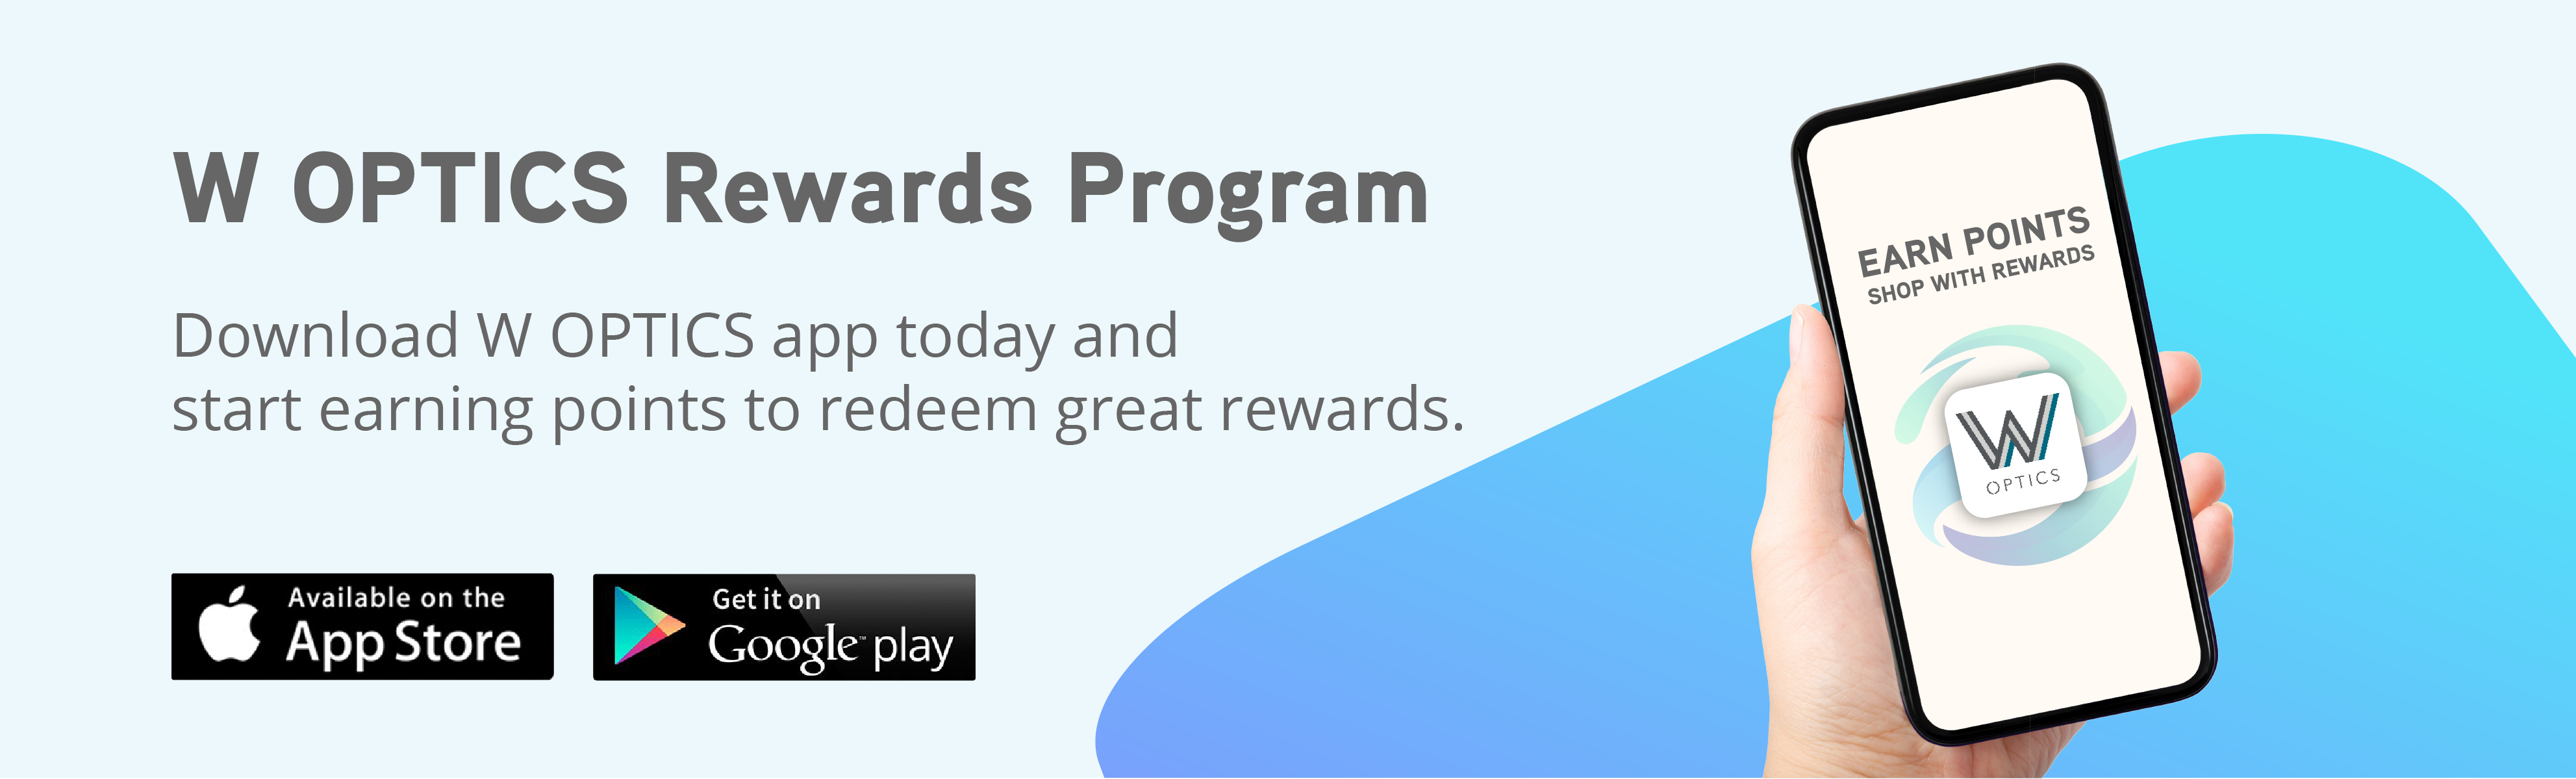 woptics-rewards-program 